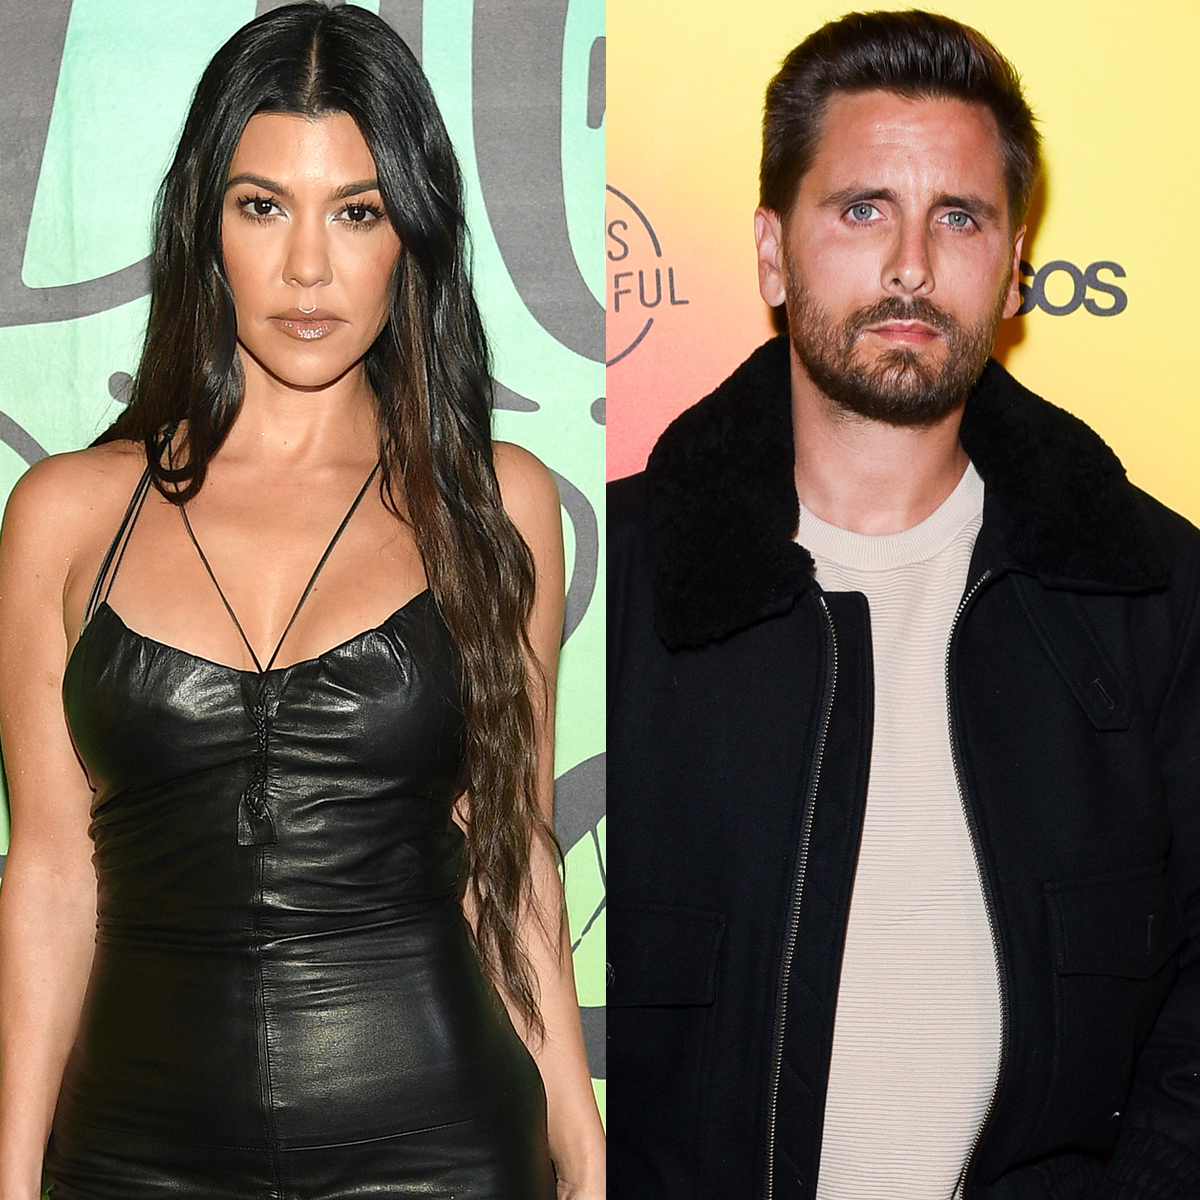 Why Kourtney Kardashian and Scott Disick Are "Barely Speaking" - E! Online  - AP